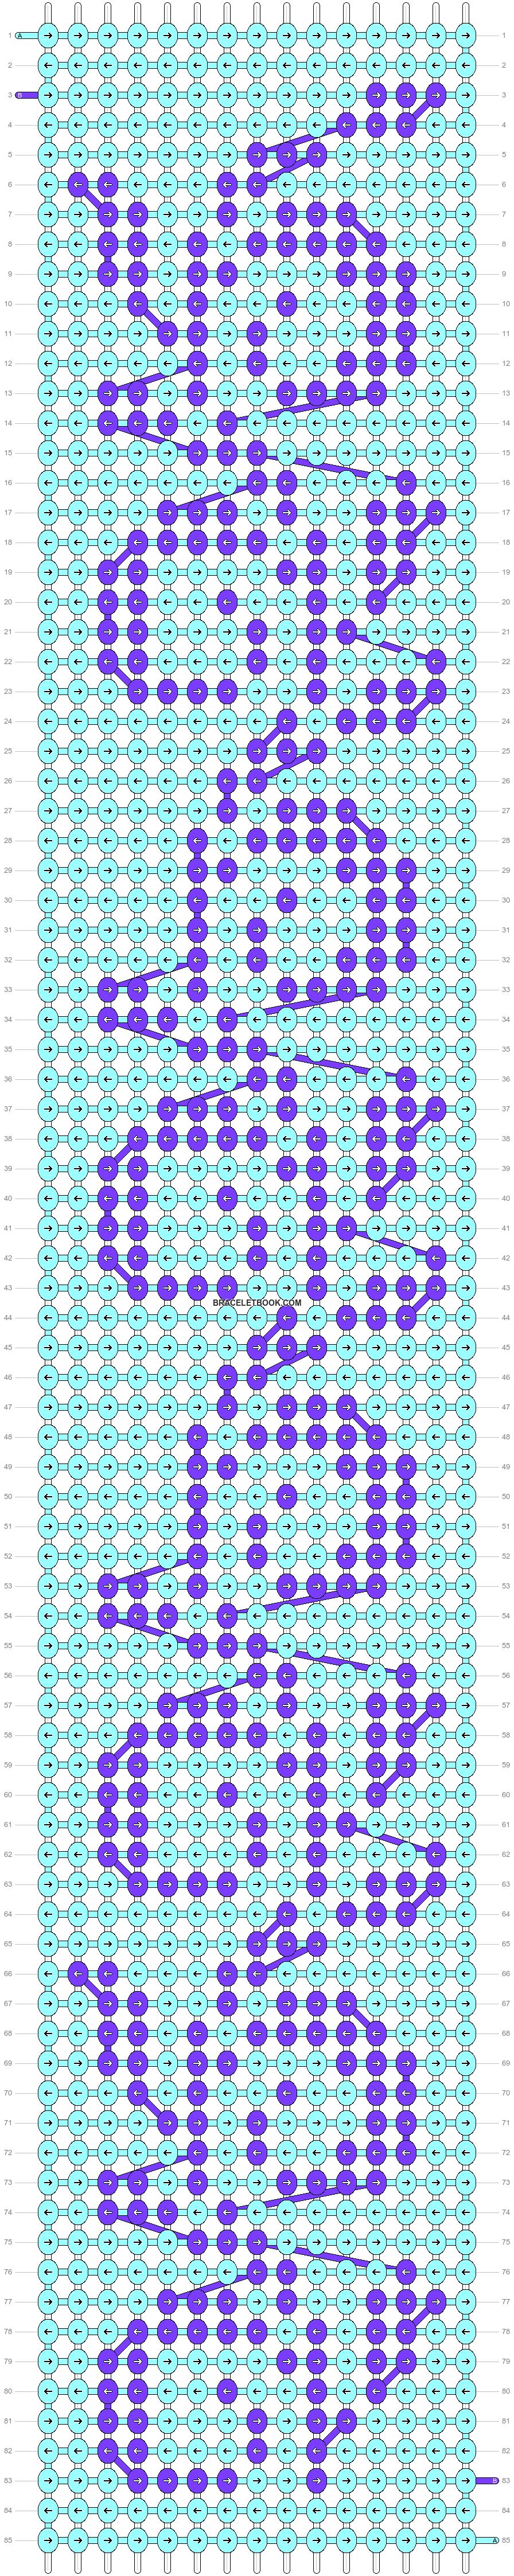 Alpha pattern #42366 variation #57882 pattern